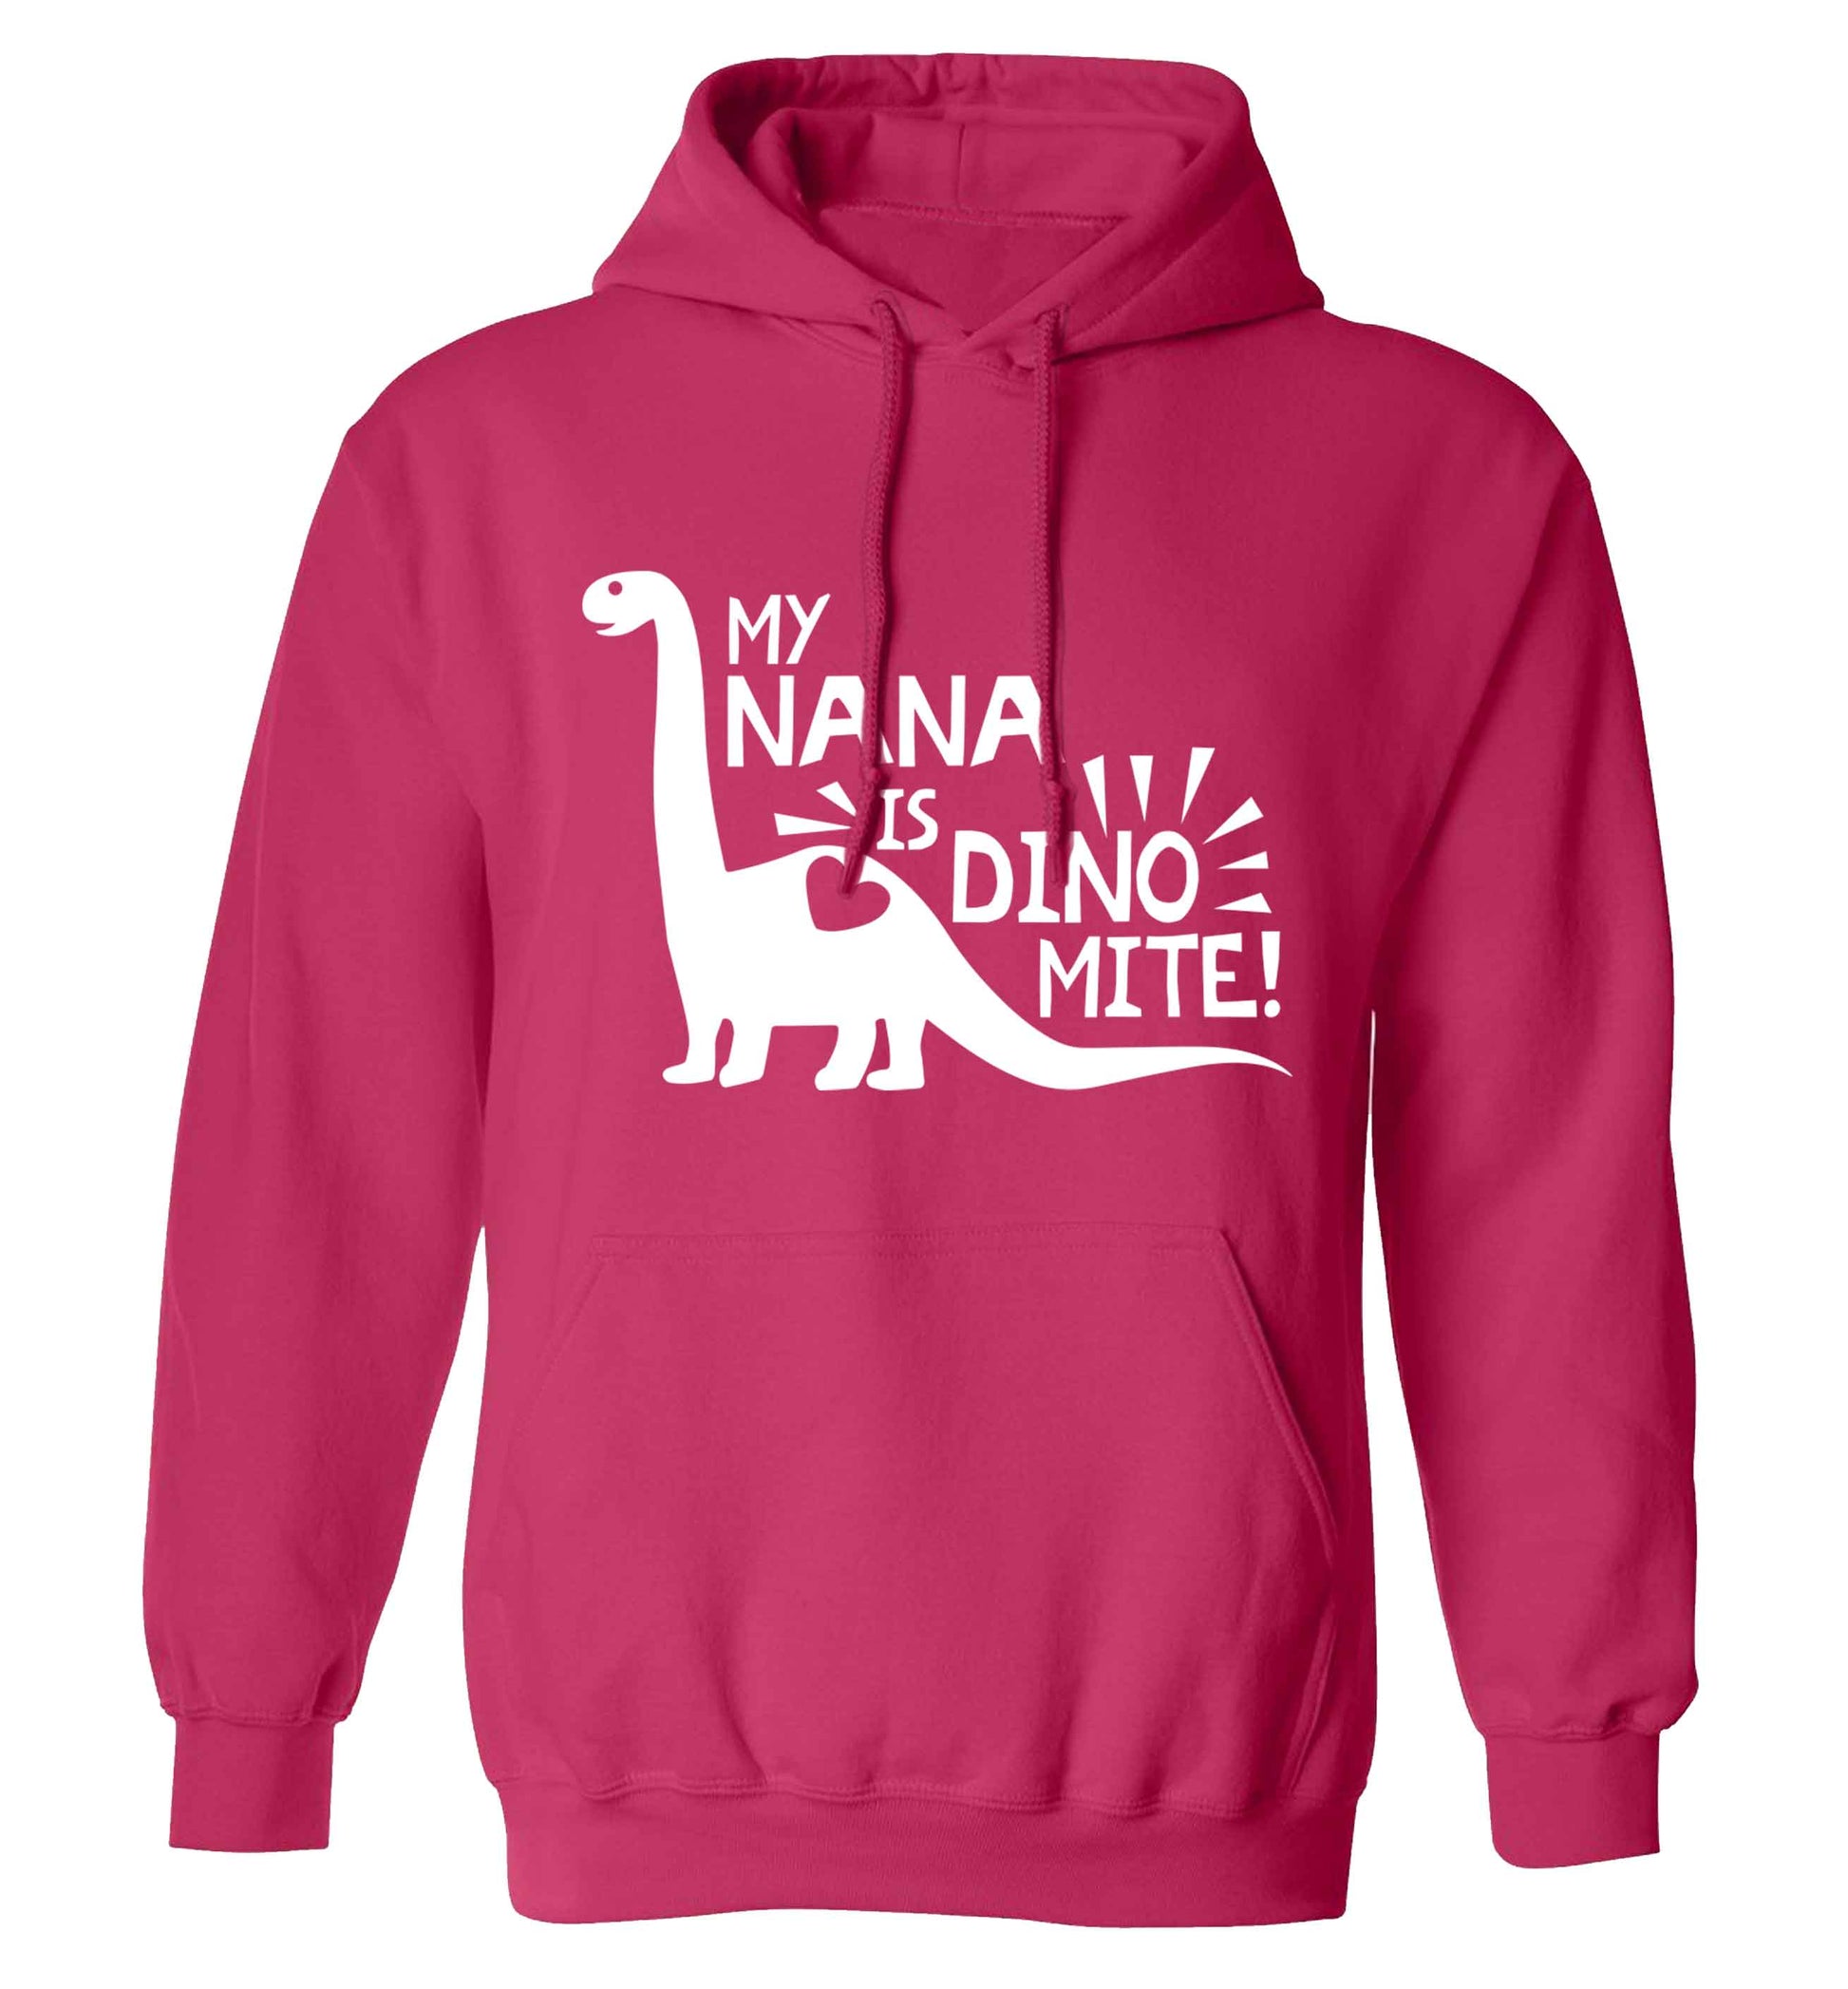 My nana is dinomite! adults unisex pink hoodie 2XL